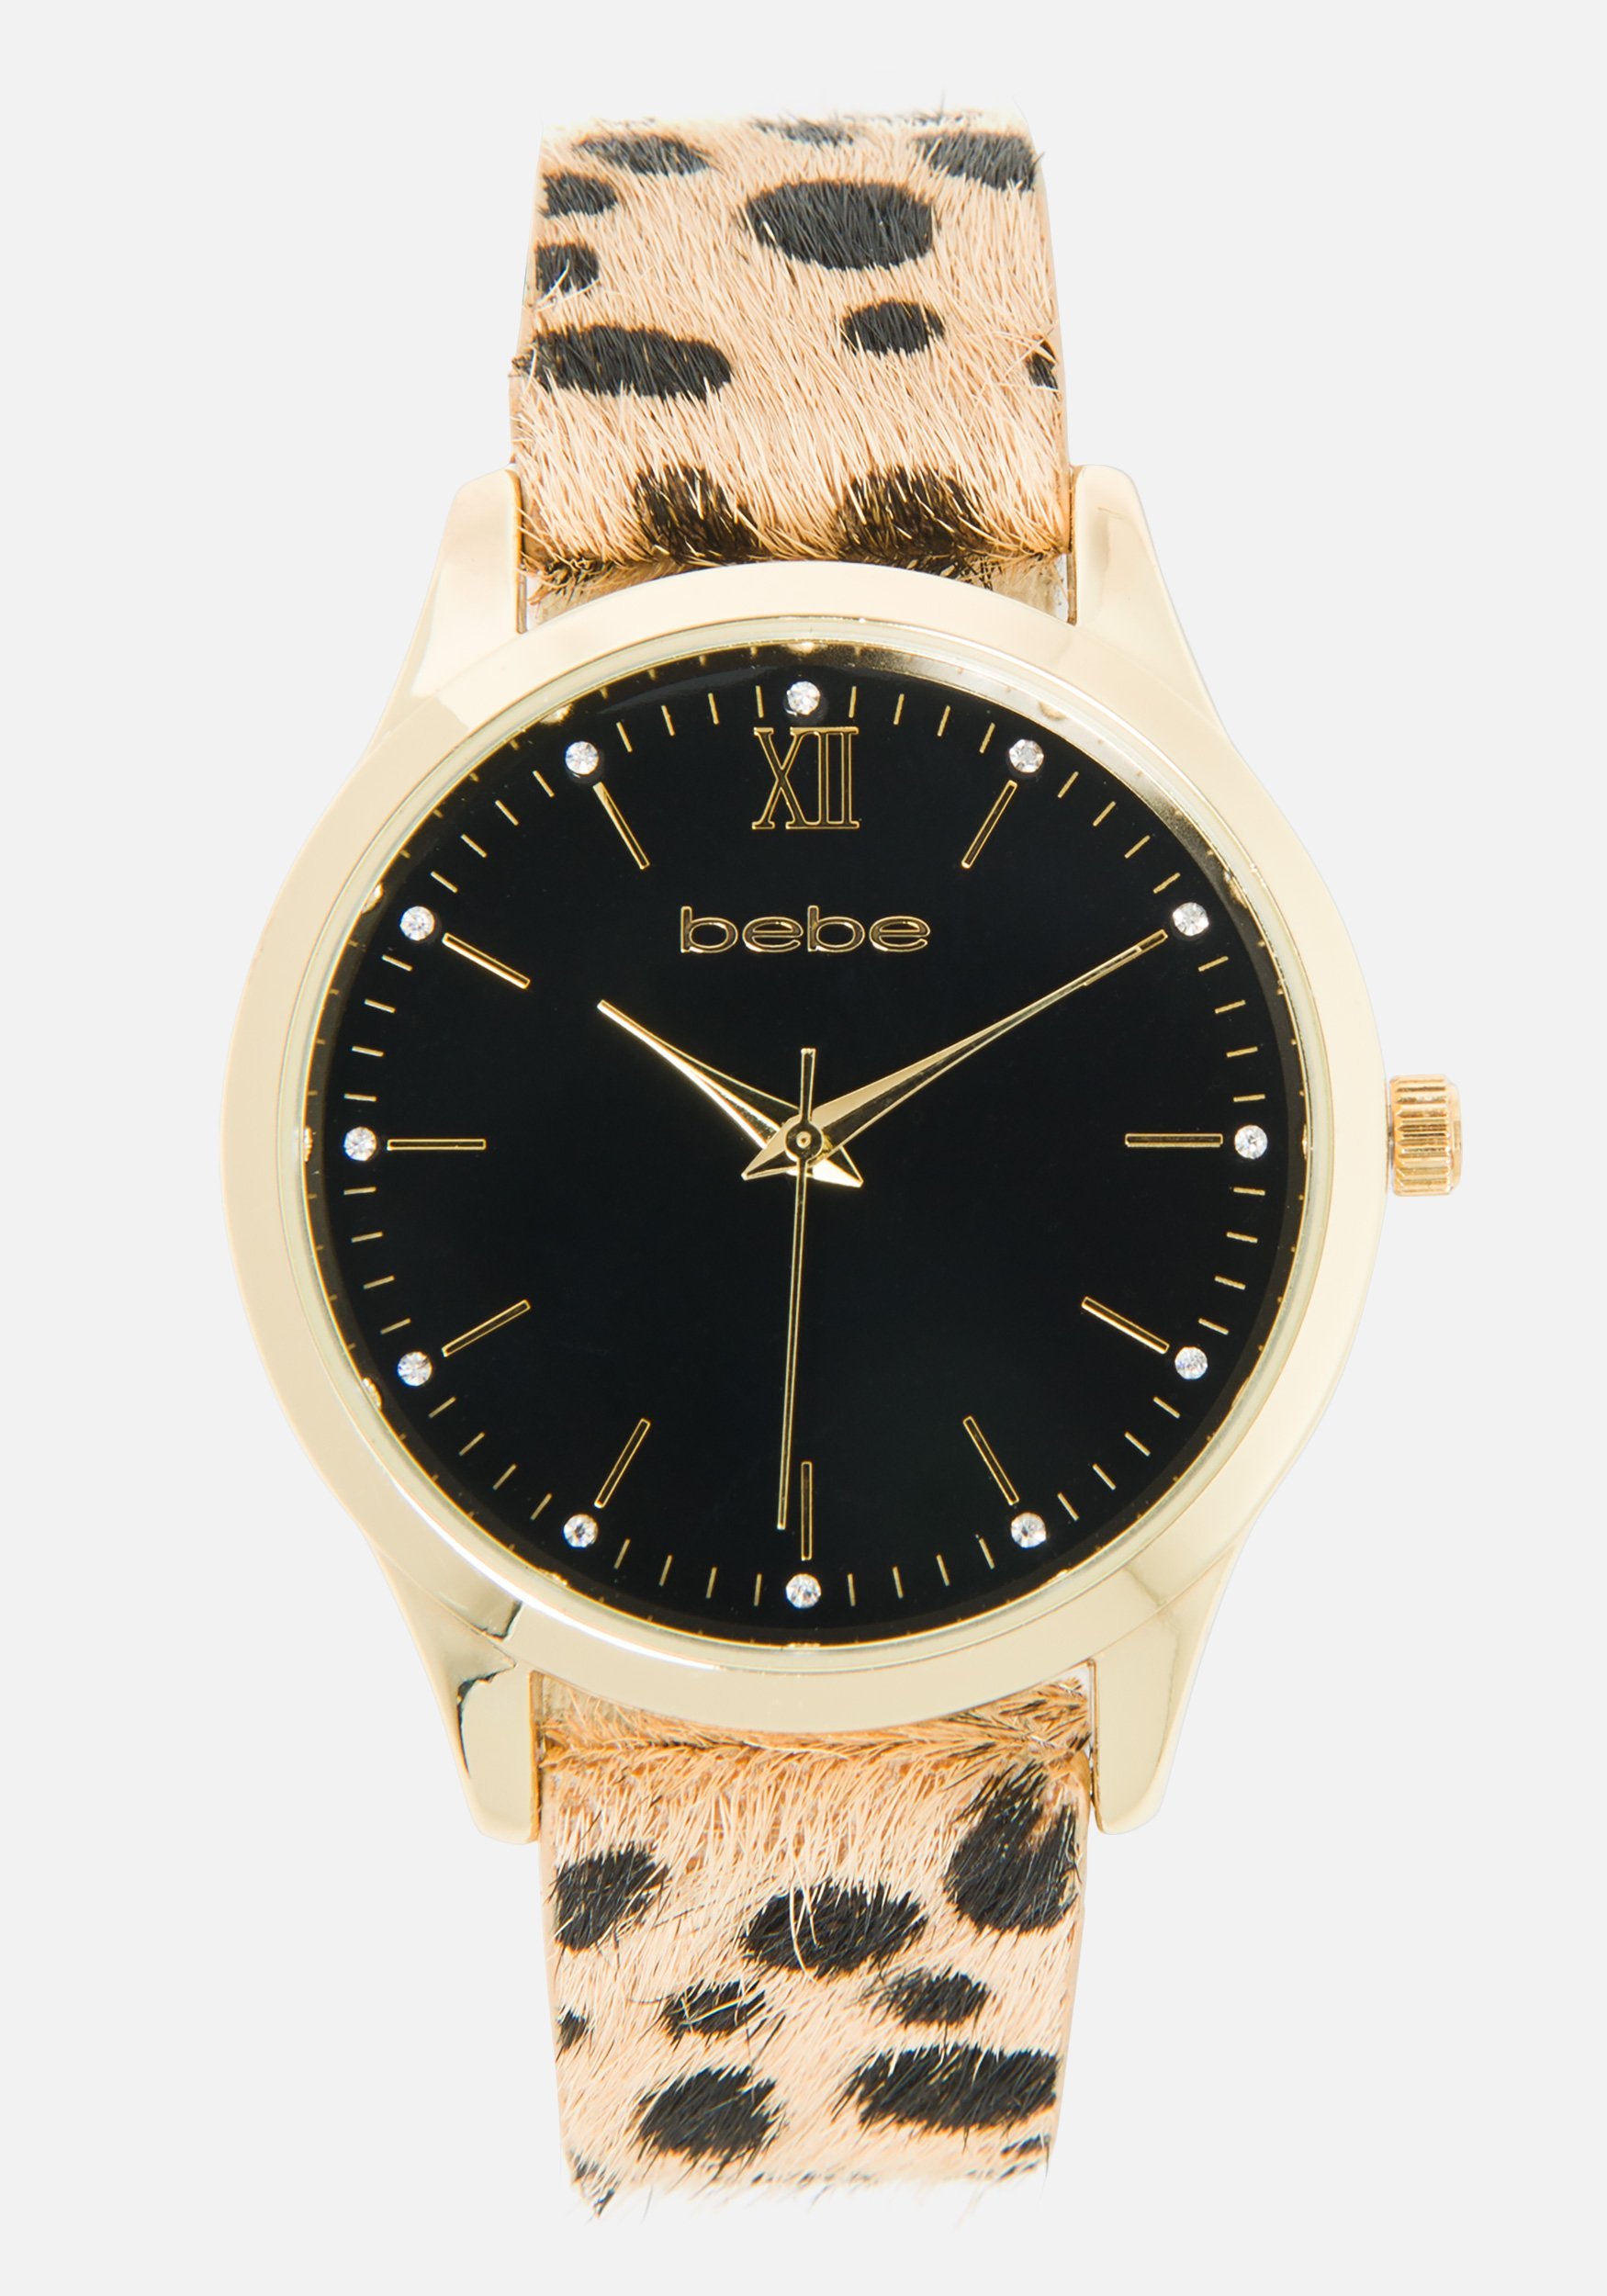 Bebe Women's Faux Cheetah Print Strap Watch in Gold/Cheetah Metal